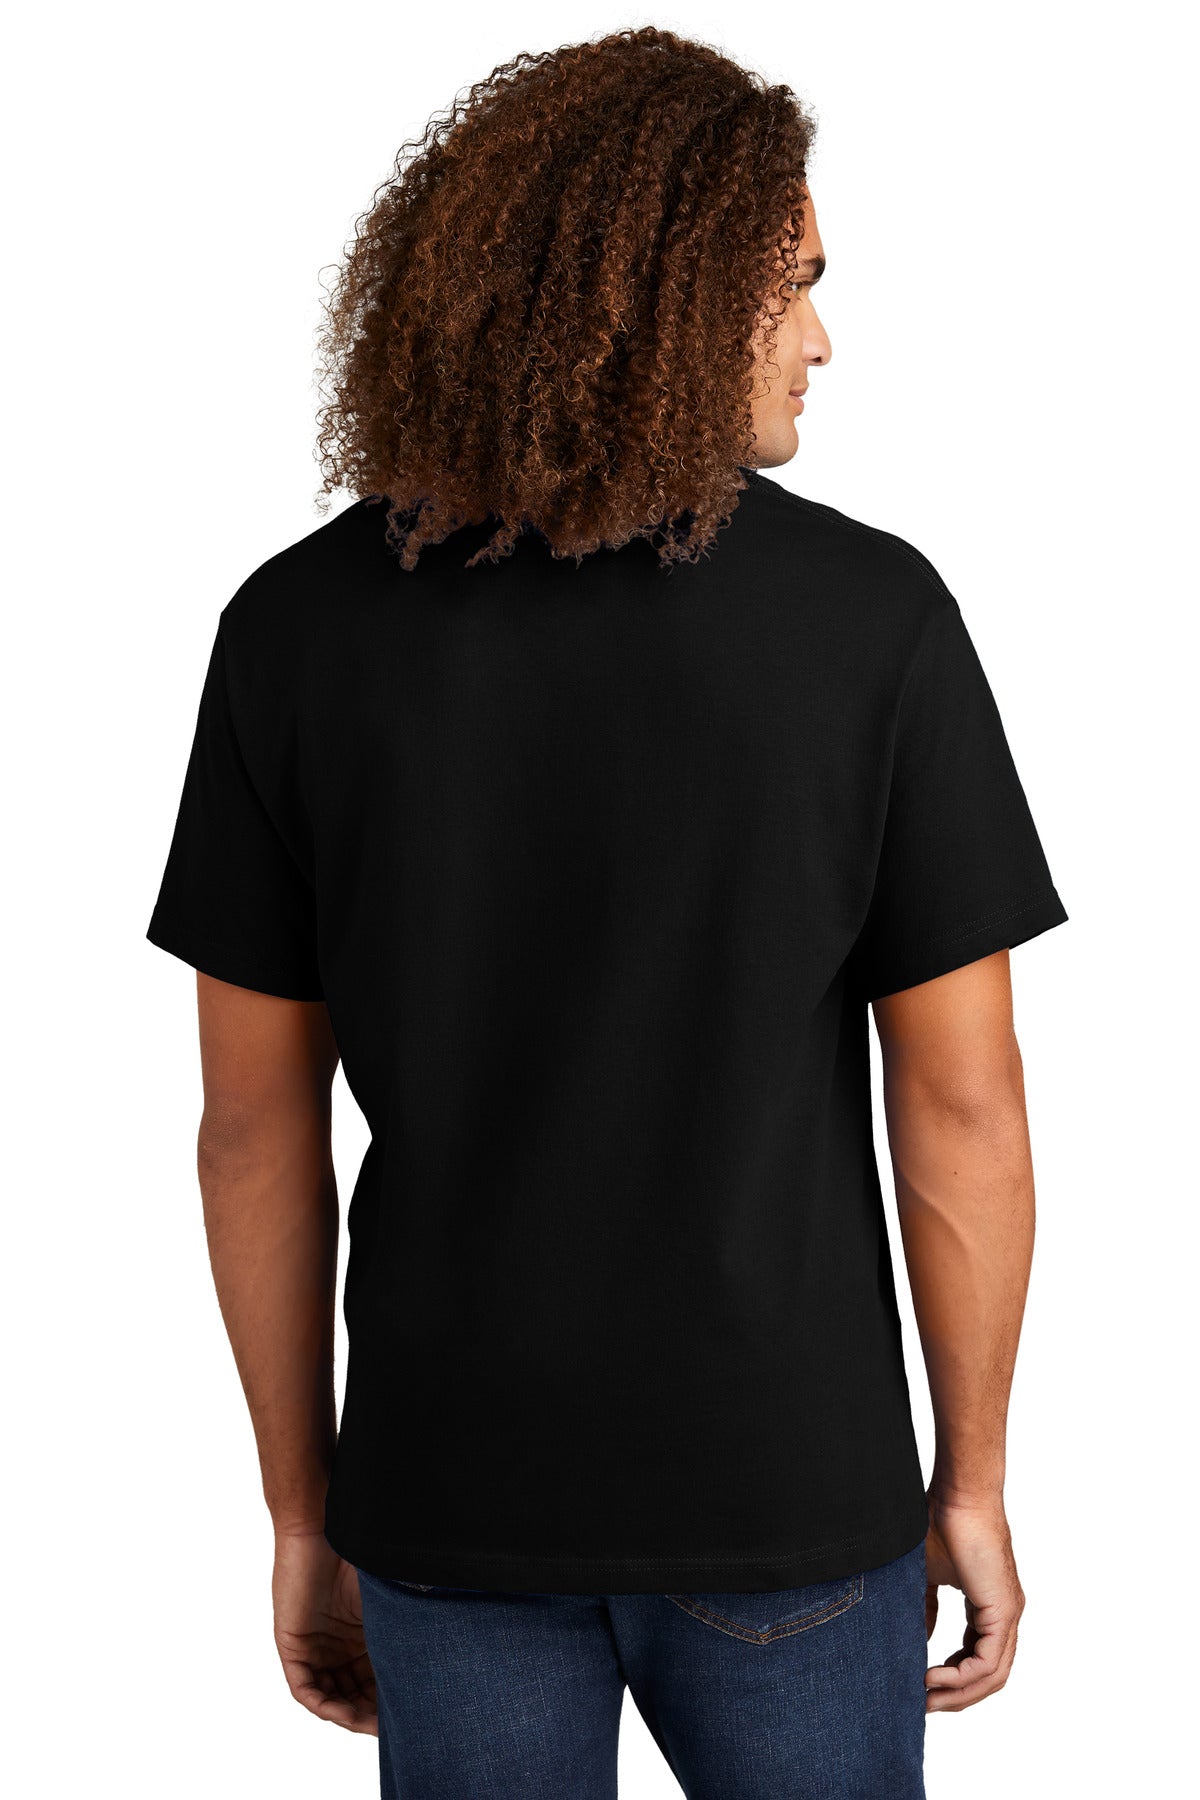 American Apparel® Relaxed T-Shirt 1301W [Black] - DFW Impression